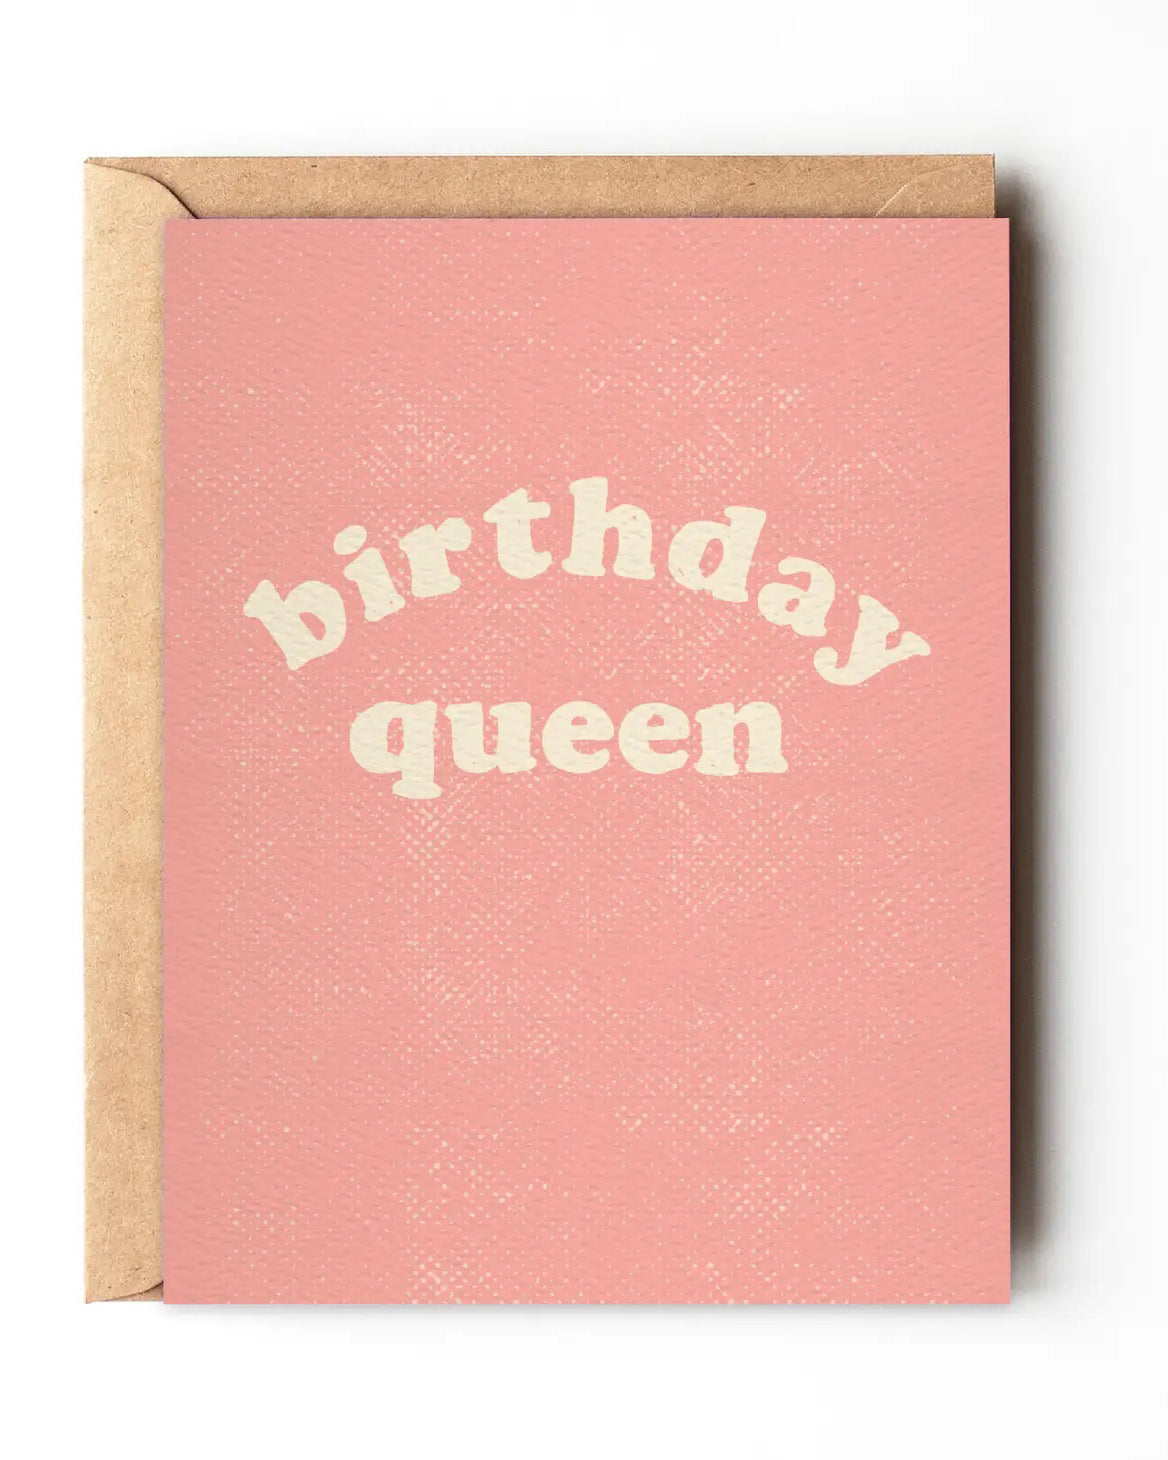 birthday queen Card